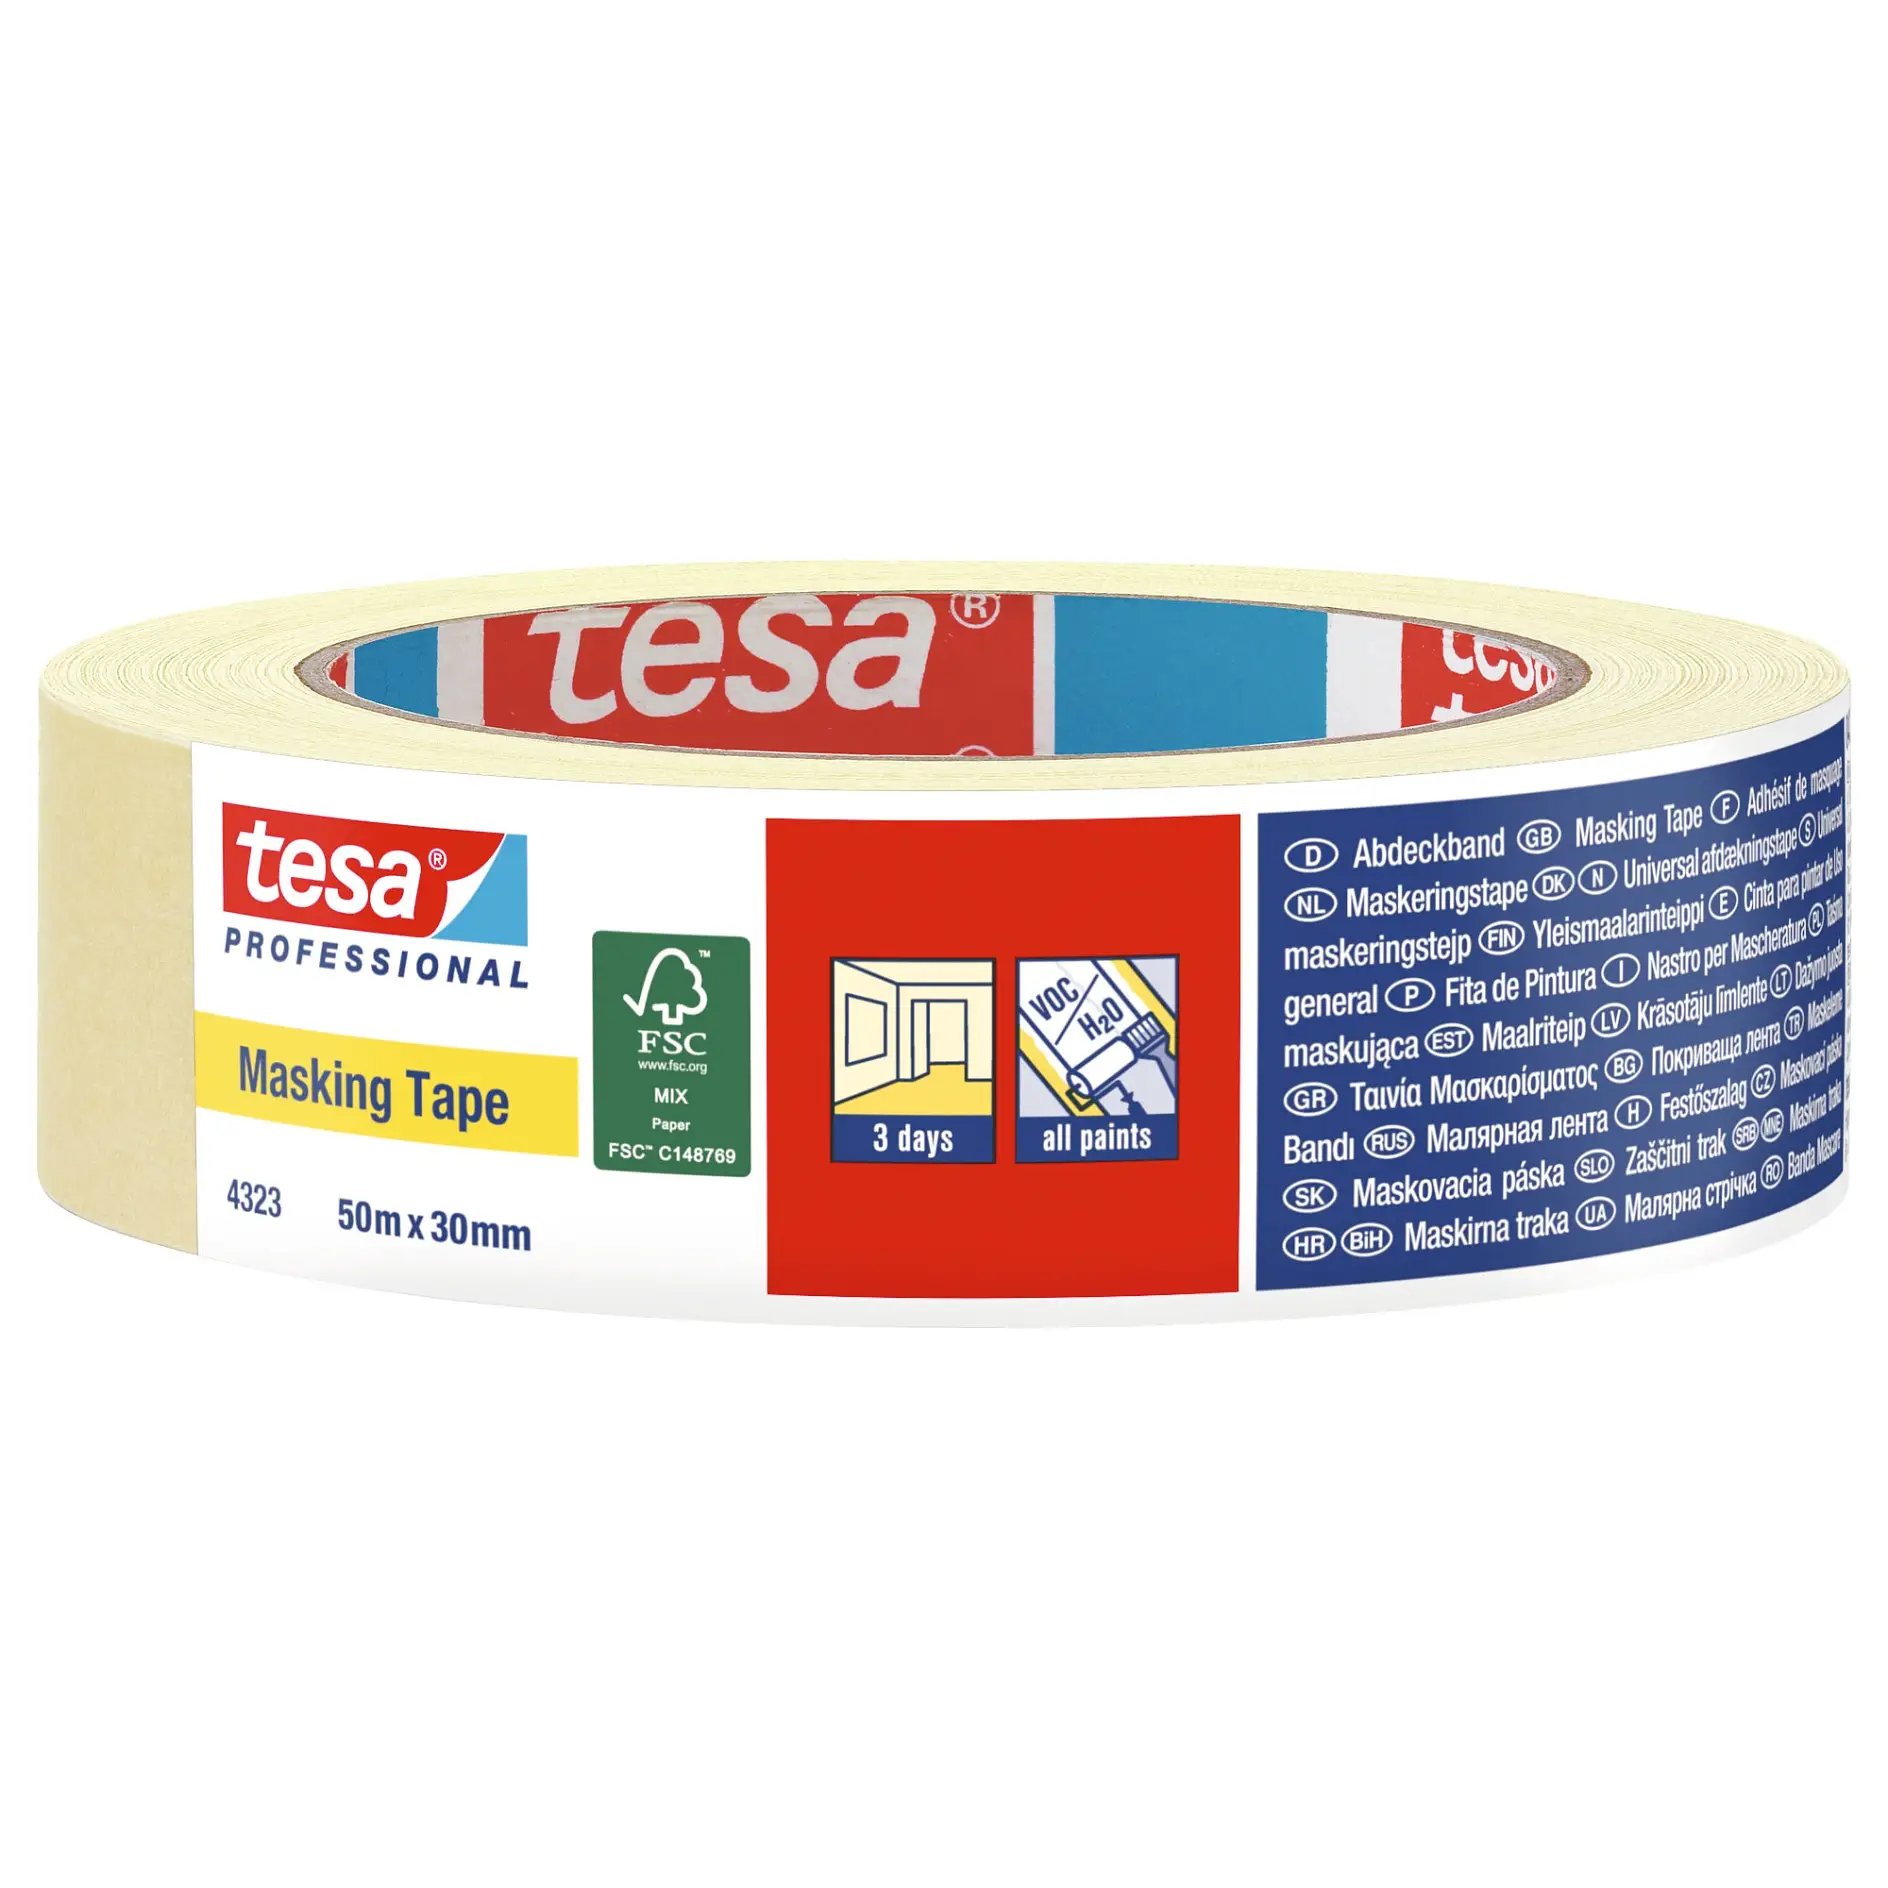 [en-en] tesa Professional Masking Tape 4323, 50m x 30mm